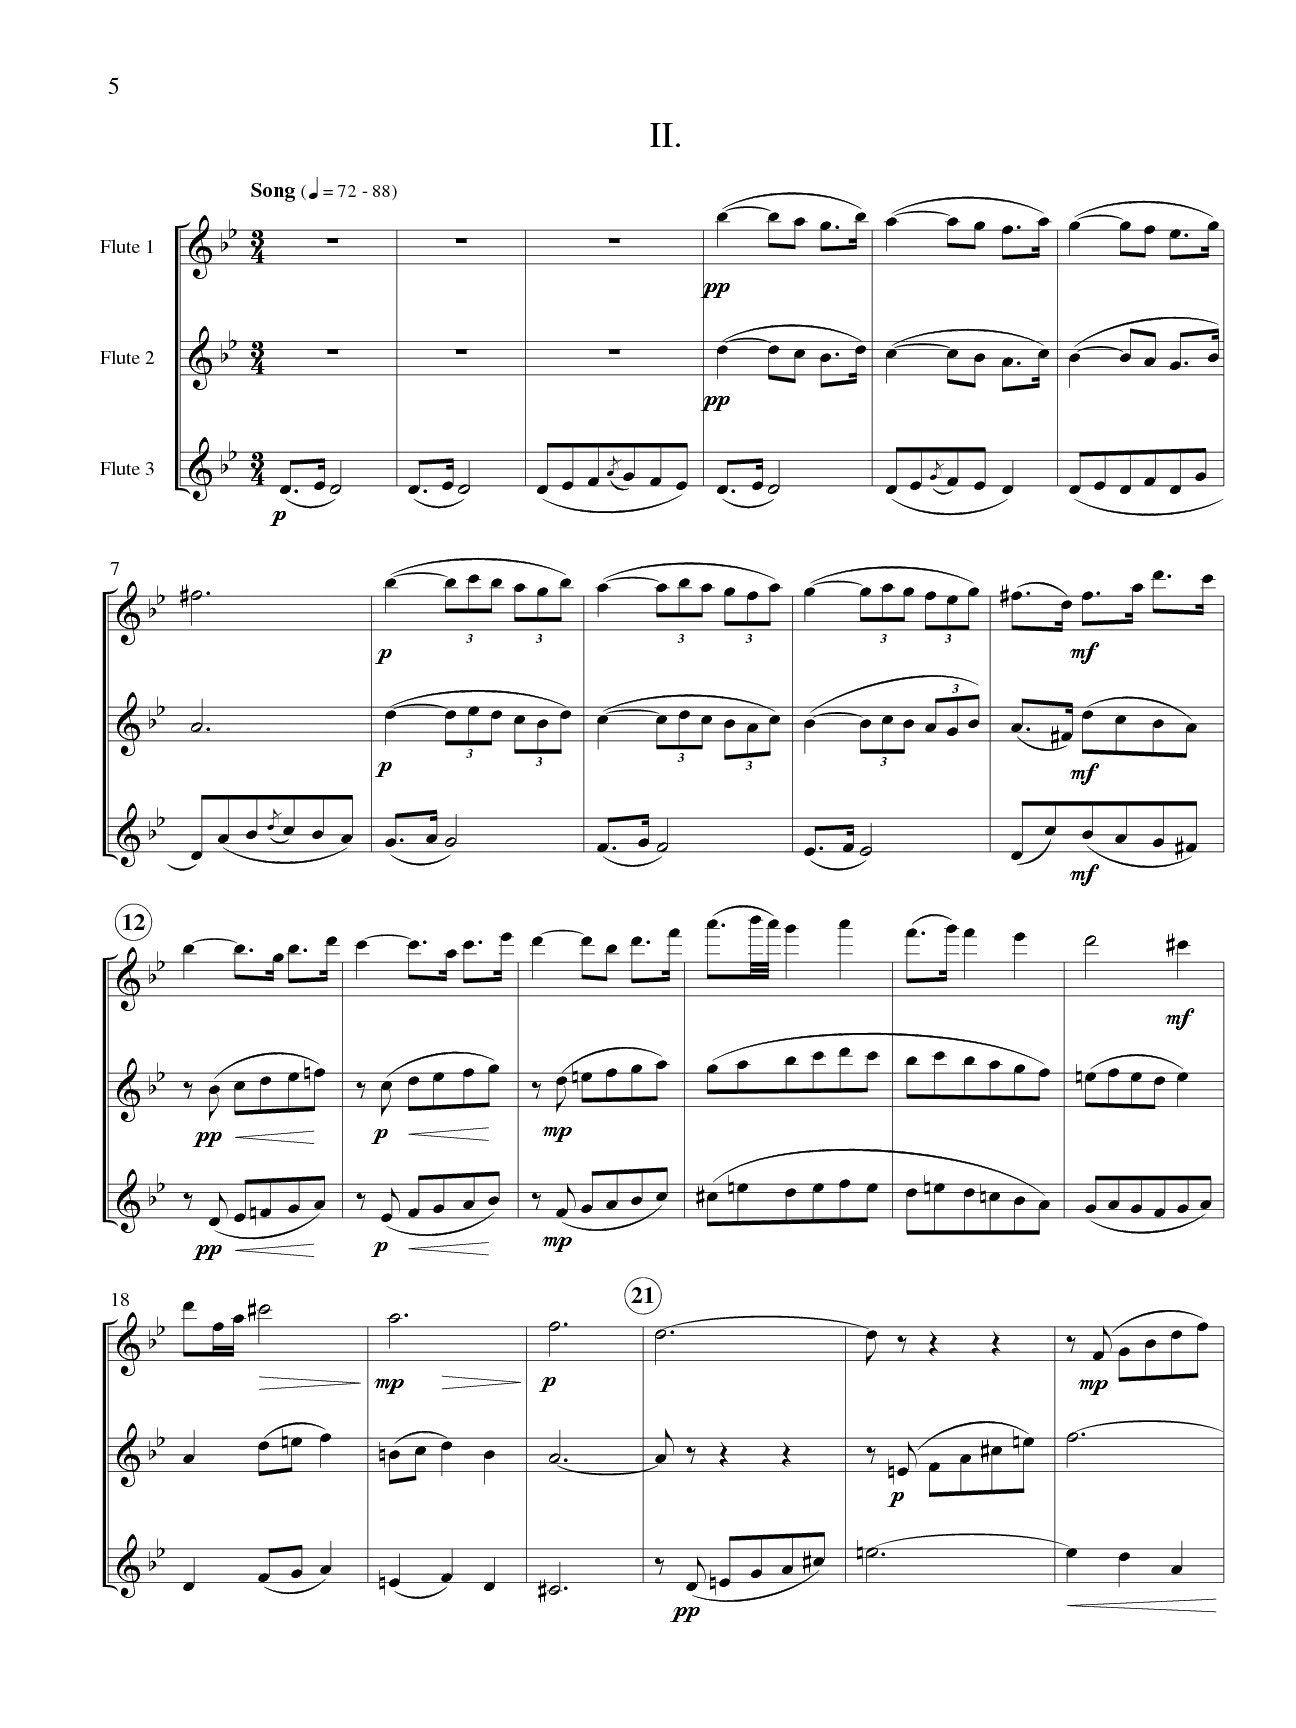 La Montaine, John - Trio Sonata for 3 Flutes or 30 Flutes or 300 Flutes